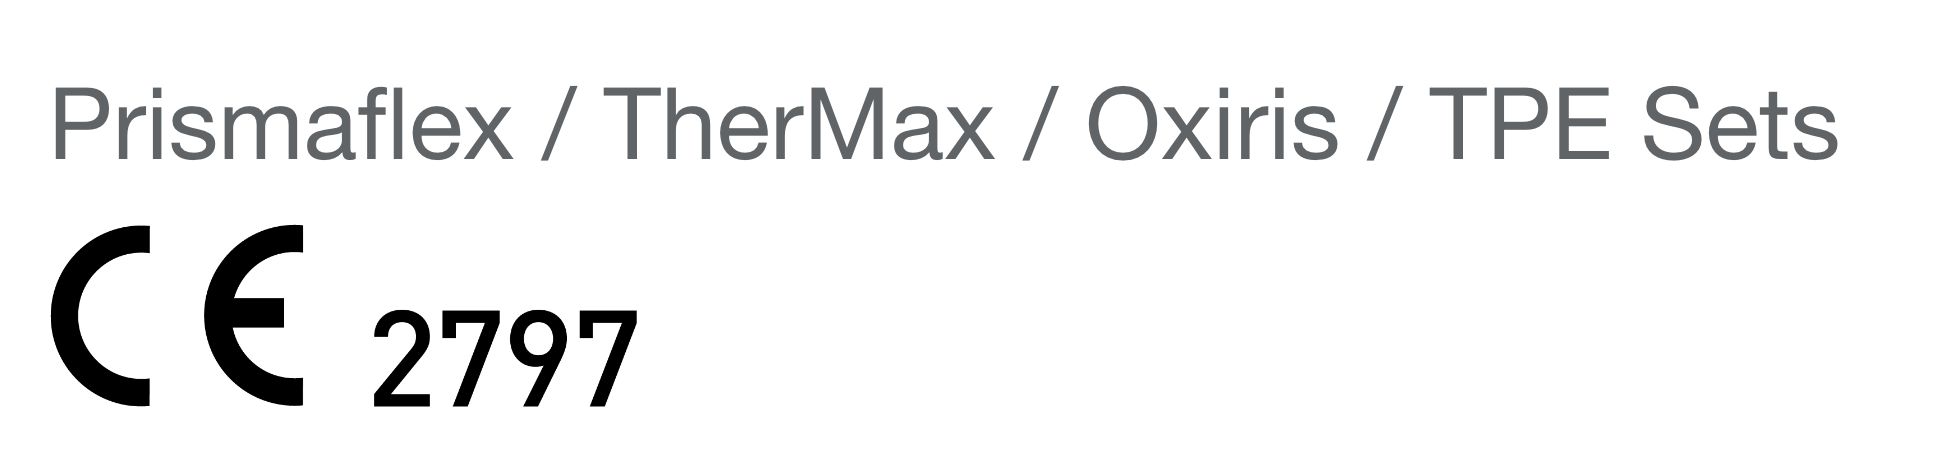 Prismaflex thermax oxiris certification mark